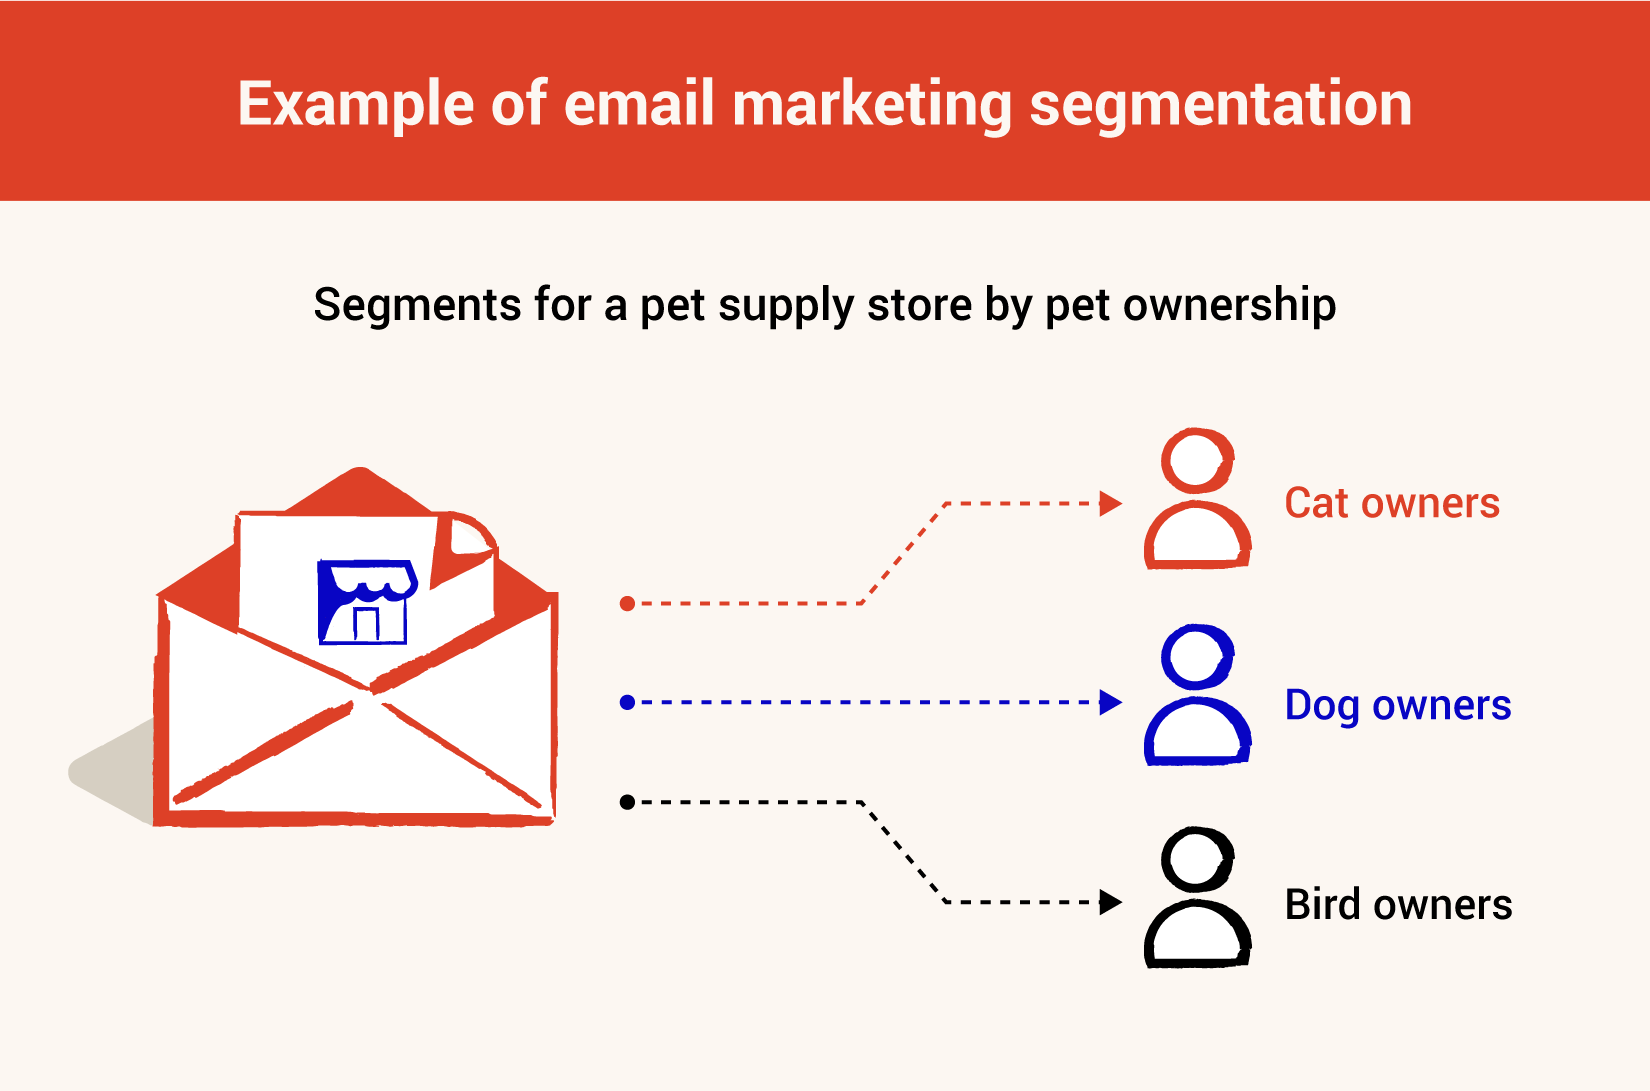 Example of email marketing segmentation infographic